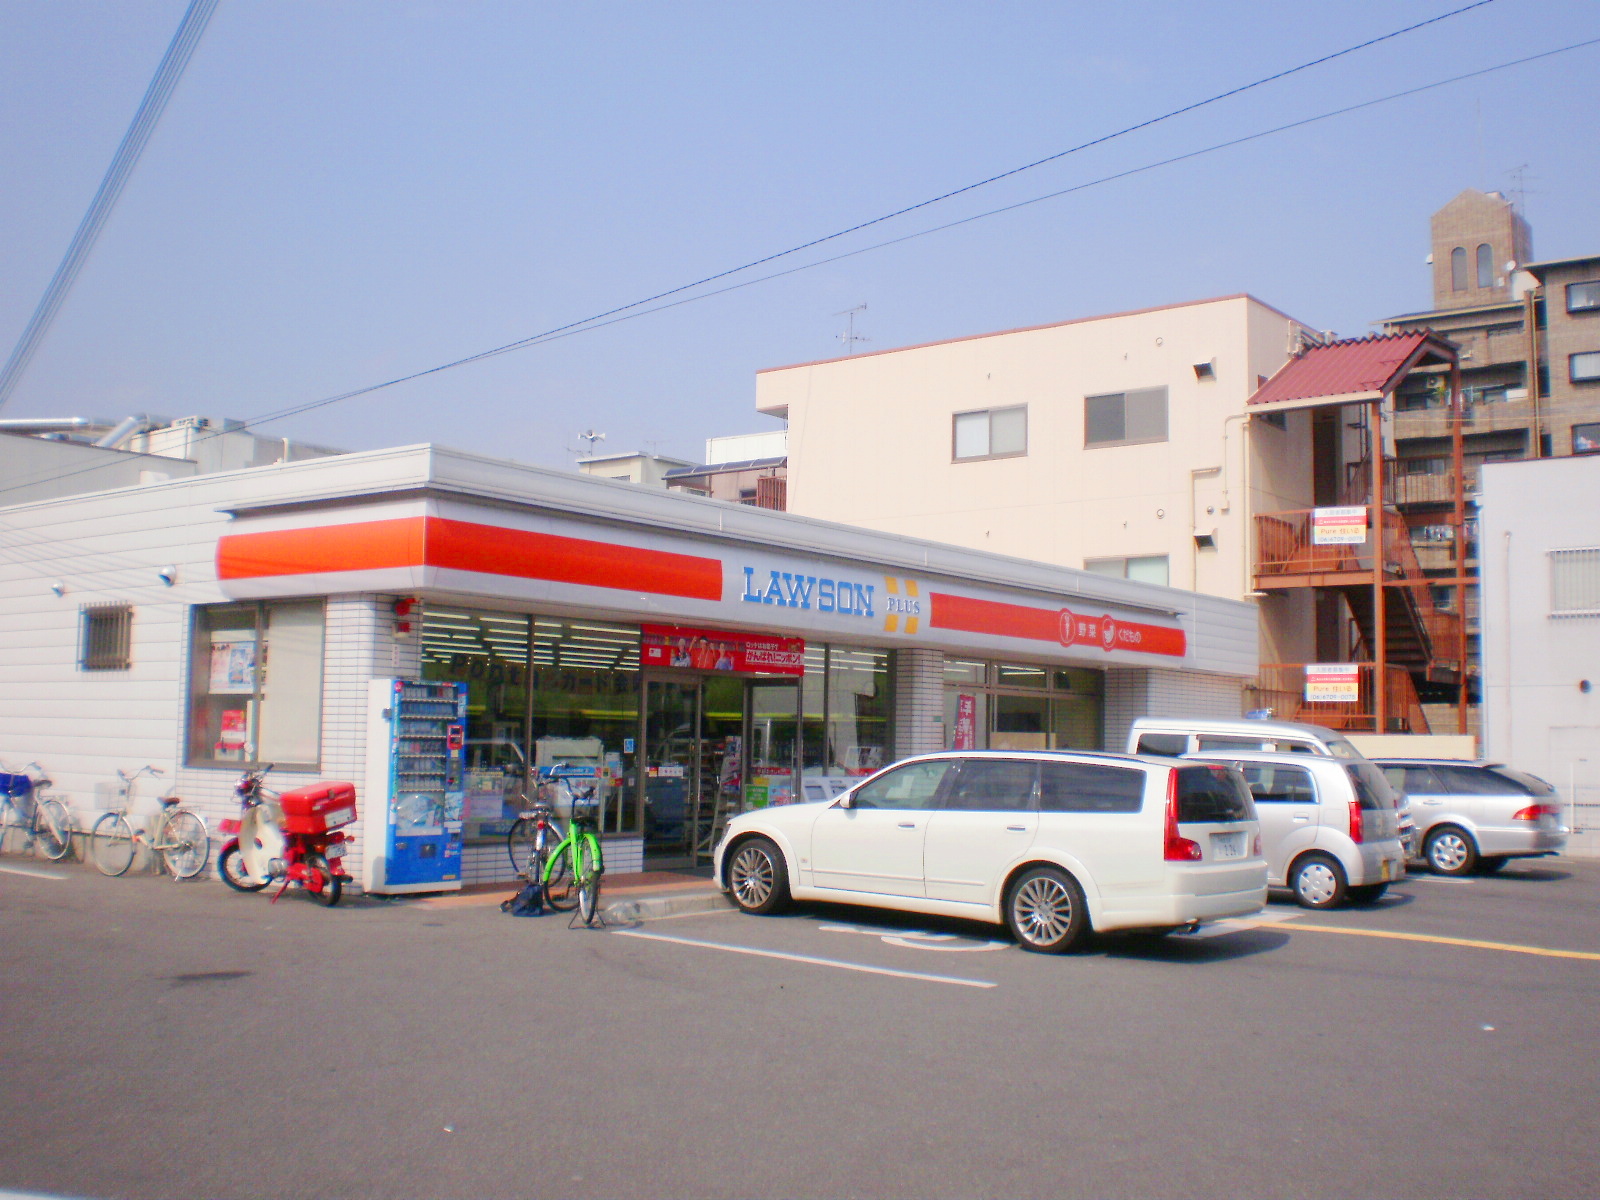 Convenience store. 986m until Lawson plus Uriwari store (convenience store)